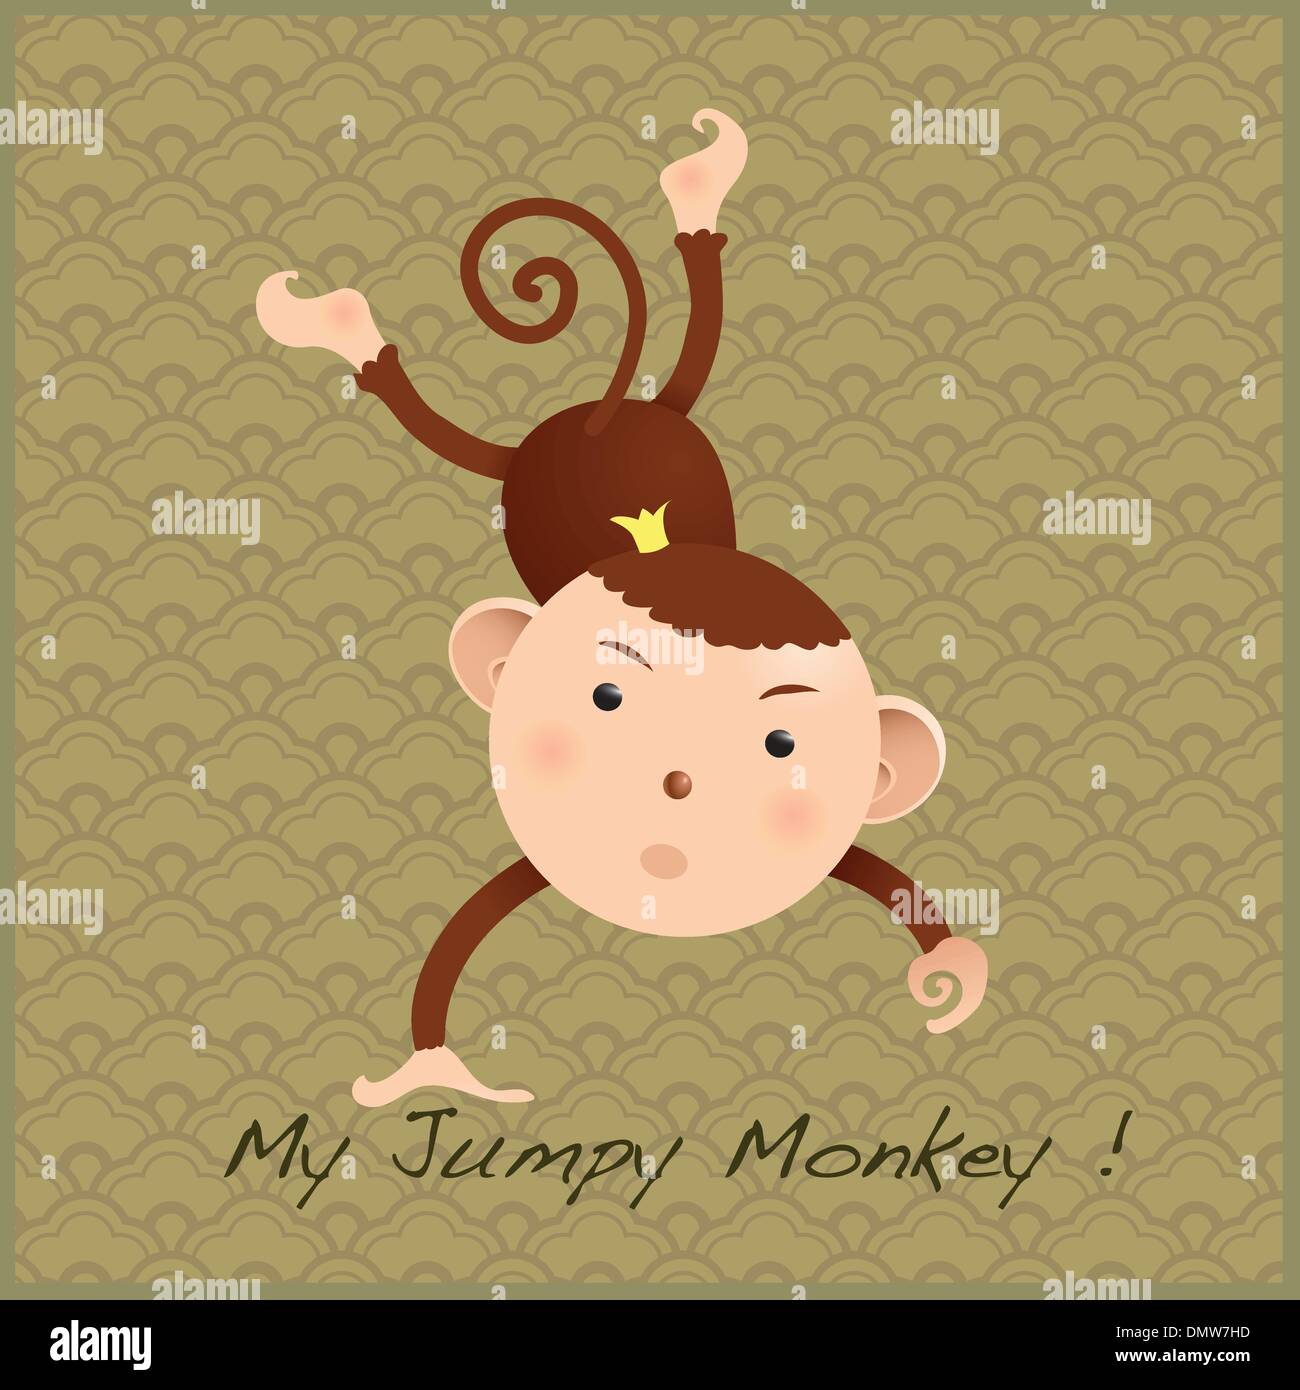 monkey on decorative background Stock Vector